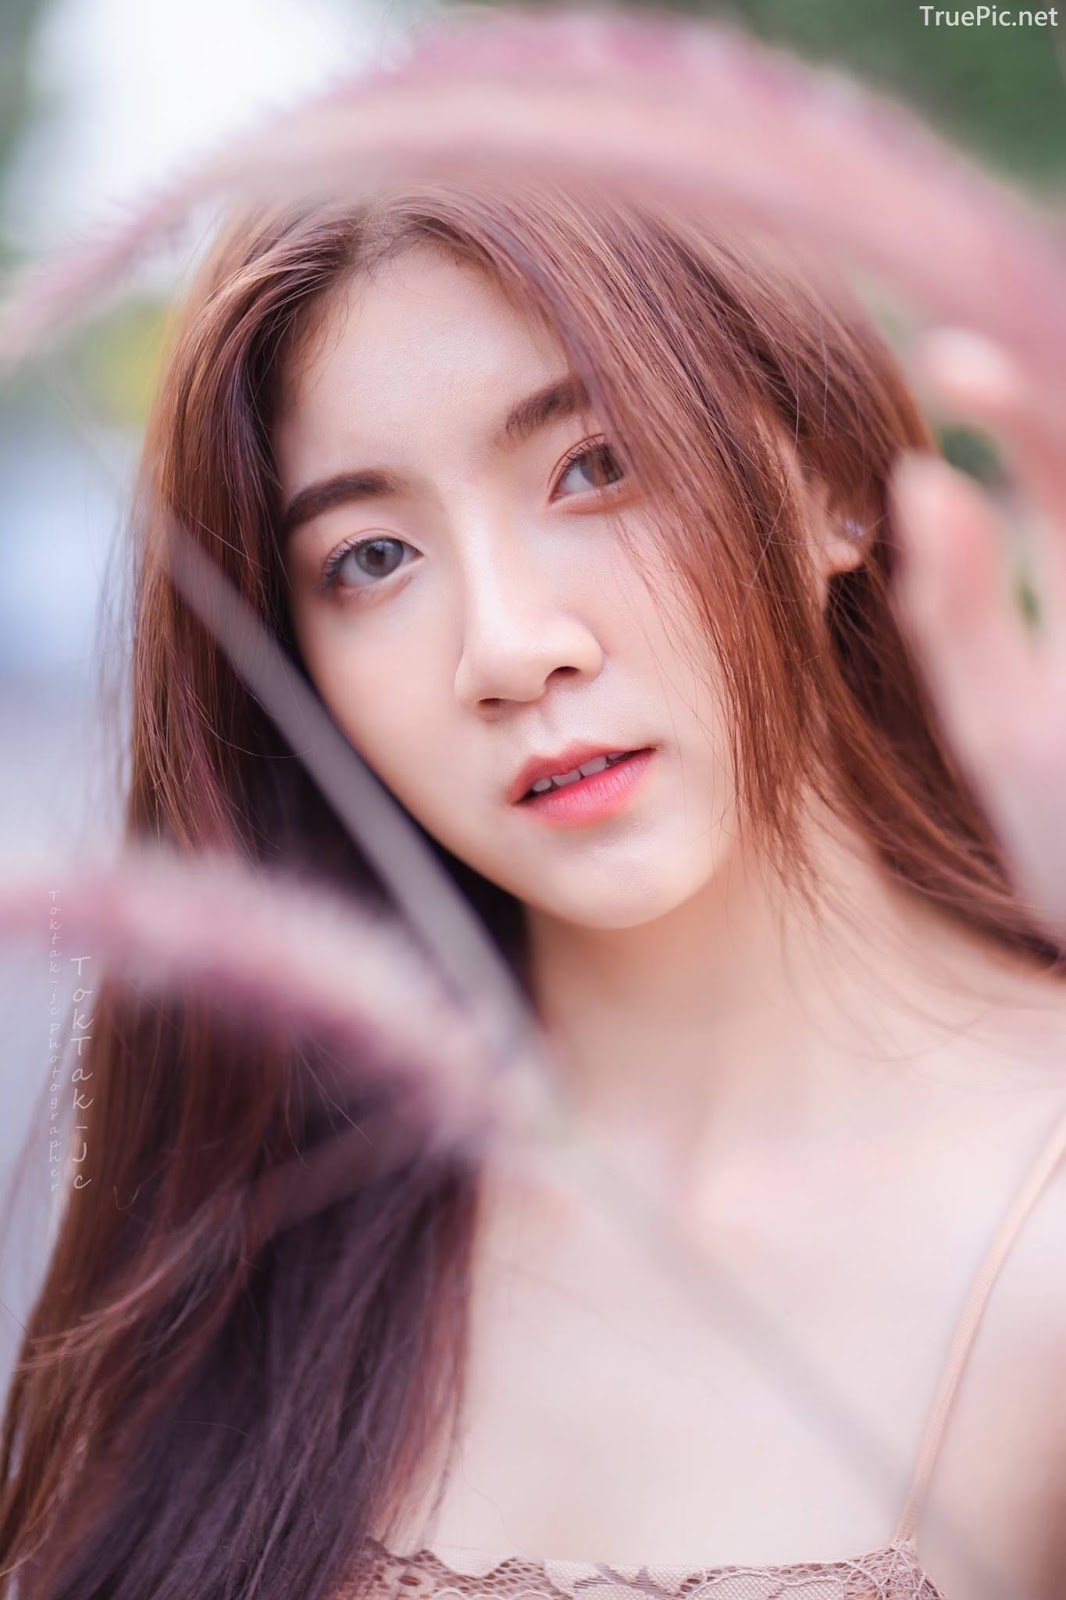 Thailand angel model Sasi Ngiunwan - Beauty portrait photoshoot - Picture 15